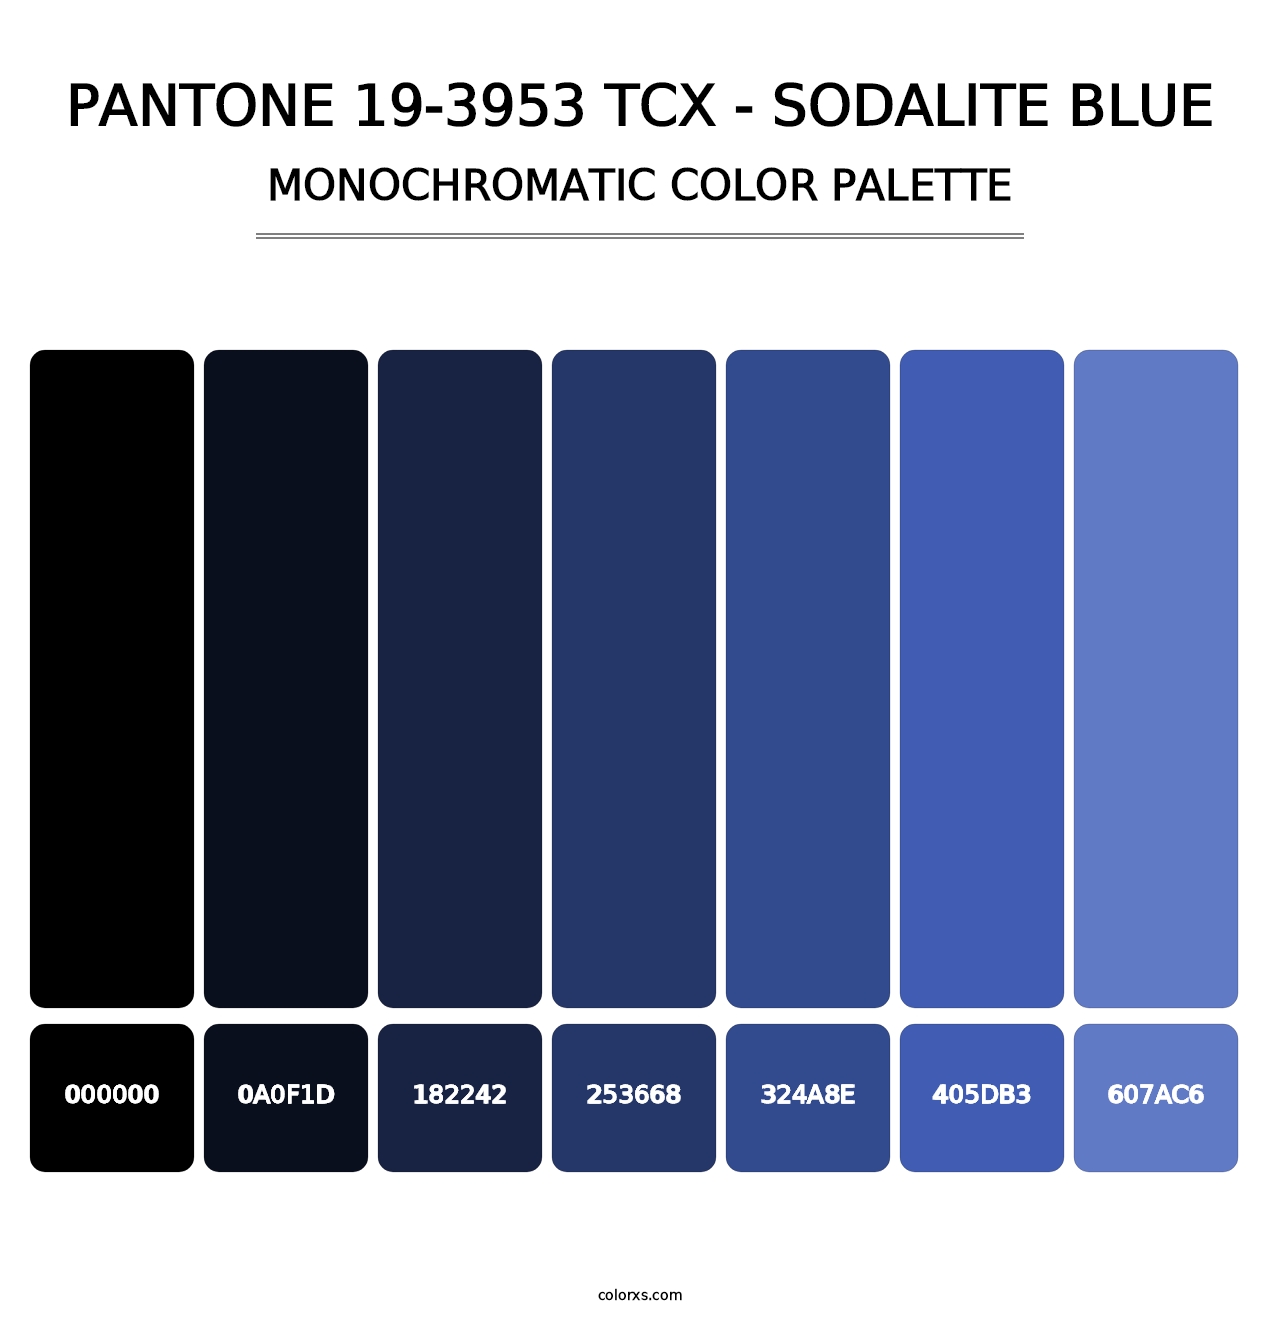 PANTONE 19-3953 TCX - Sodalite Blue - Monochromatic Color Palette